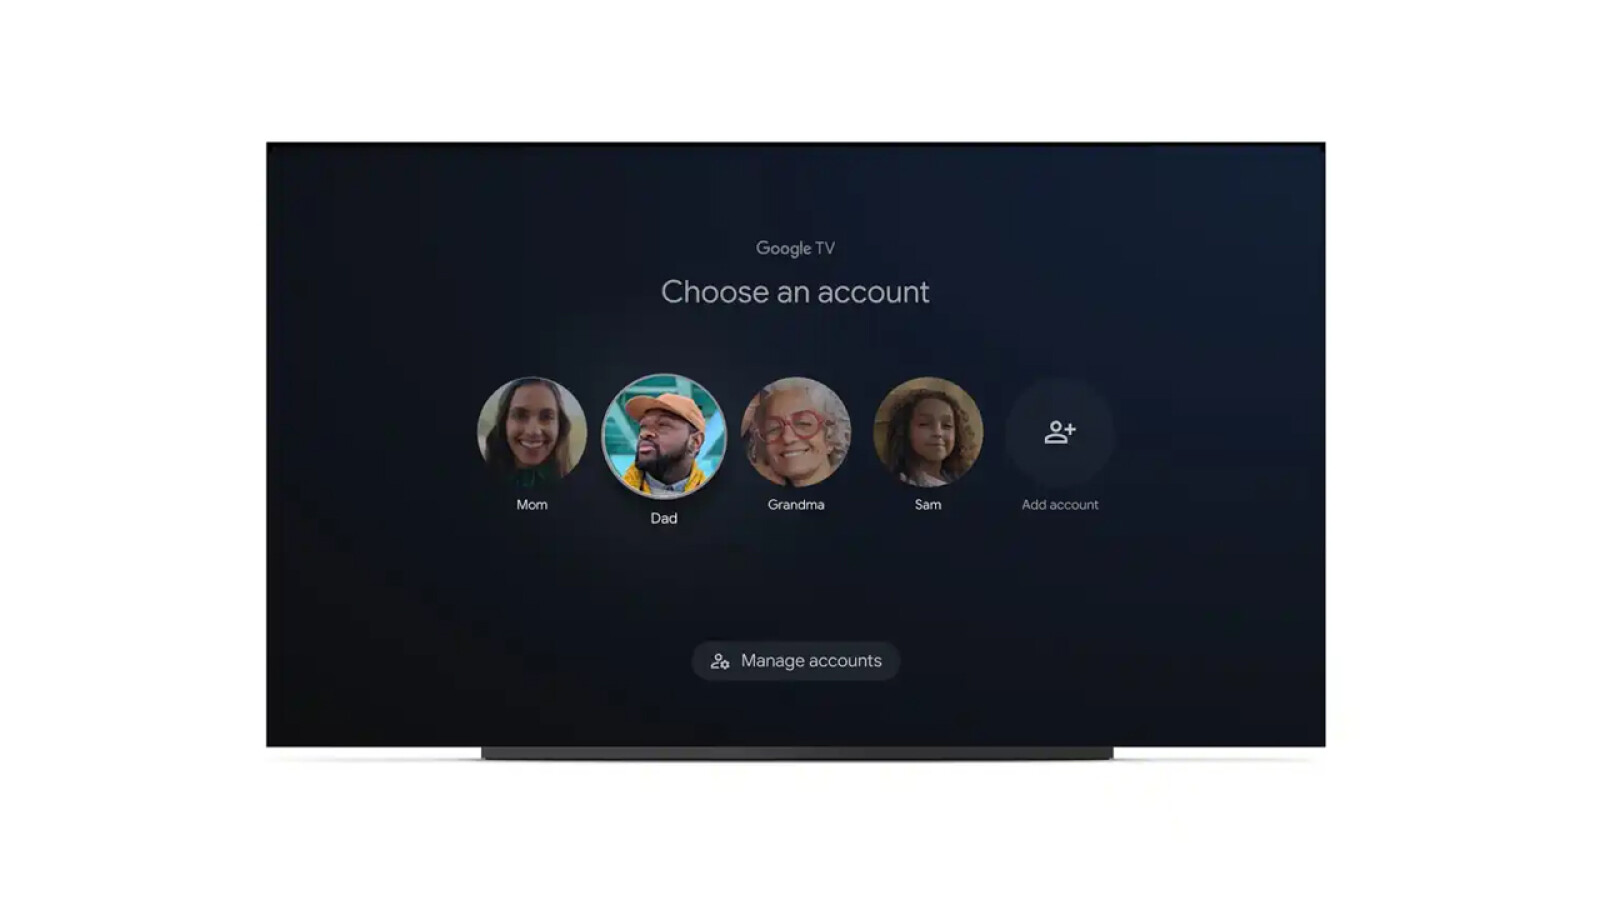 Google TV memperkenalkan profil pengguna: Anda akhirnya tidak akan melihat konten adik perempuan Anda lagi